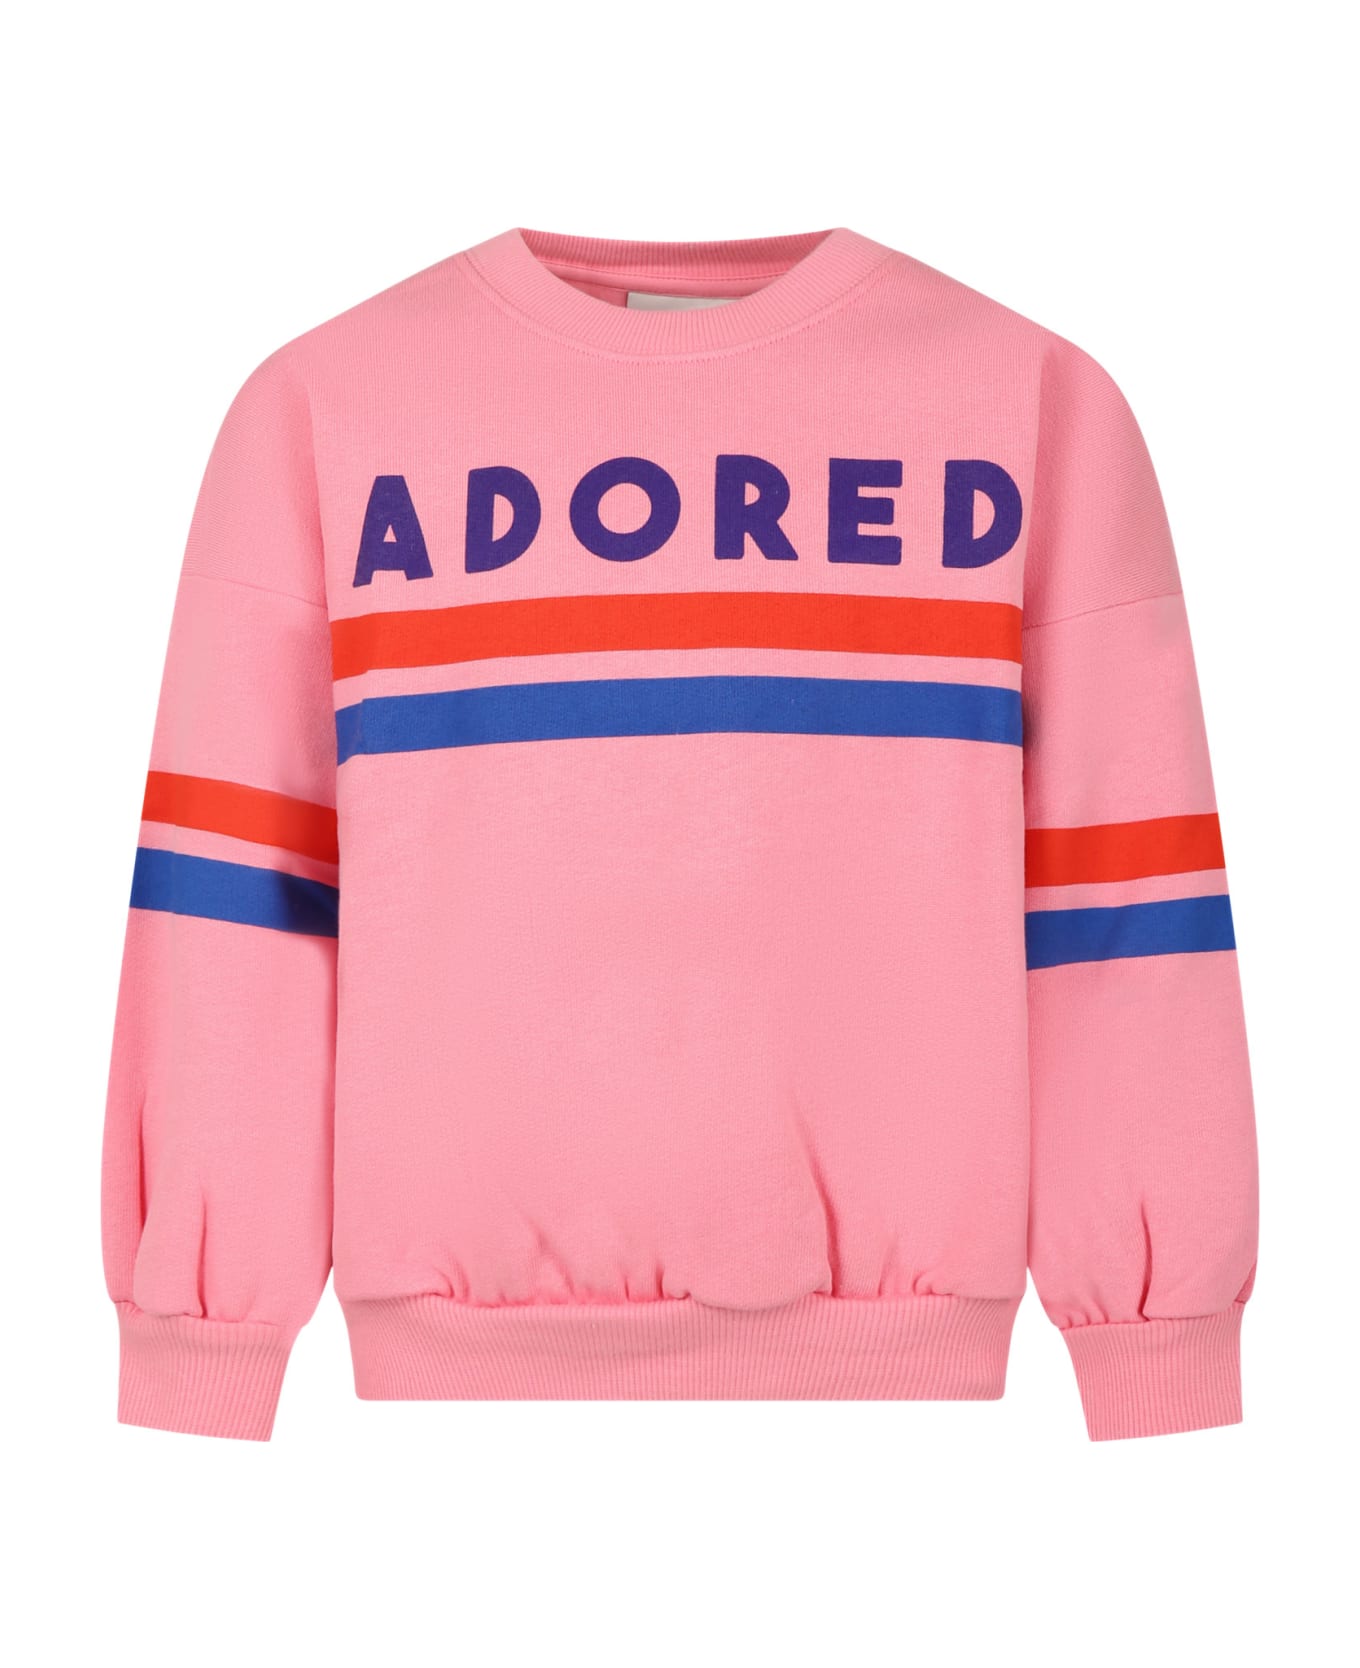 Mini Rodini Pink Sweatshirt For Girl With Writing - Pink